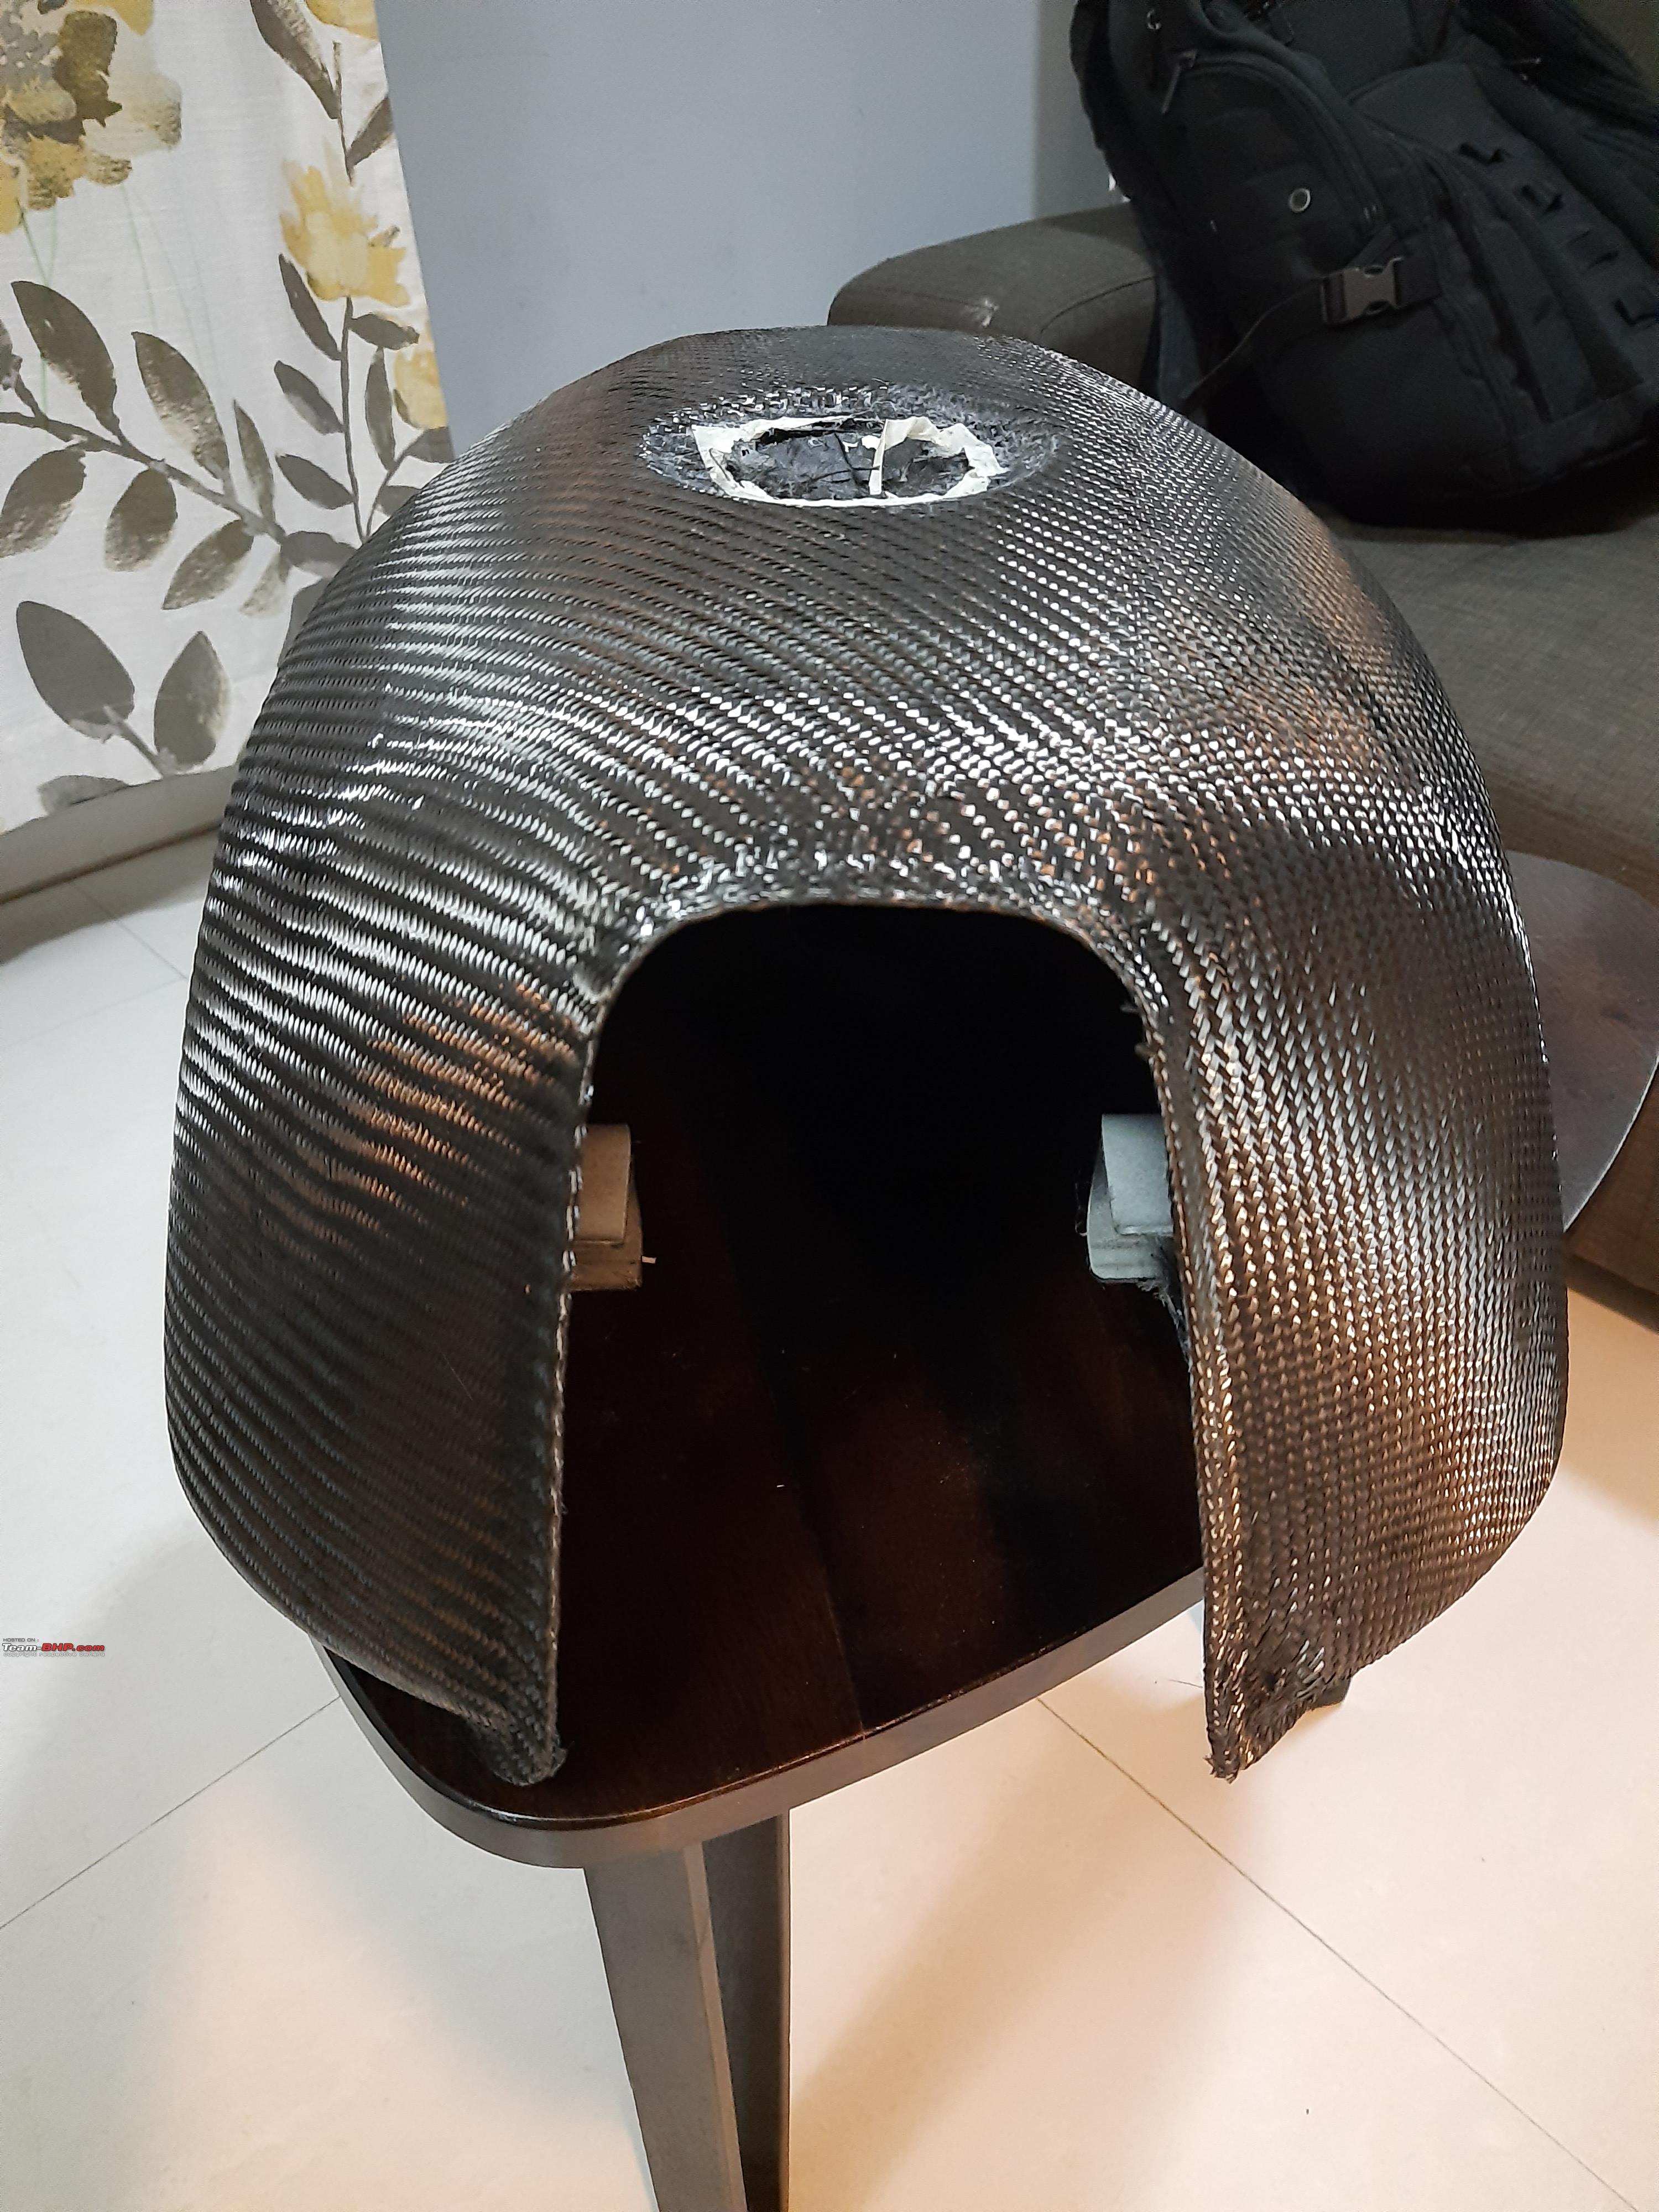 DIY: Carbon fiber lamination of my motorcycle's fuel tank - Team-BHP